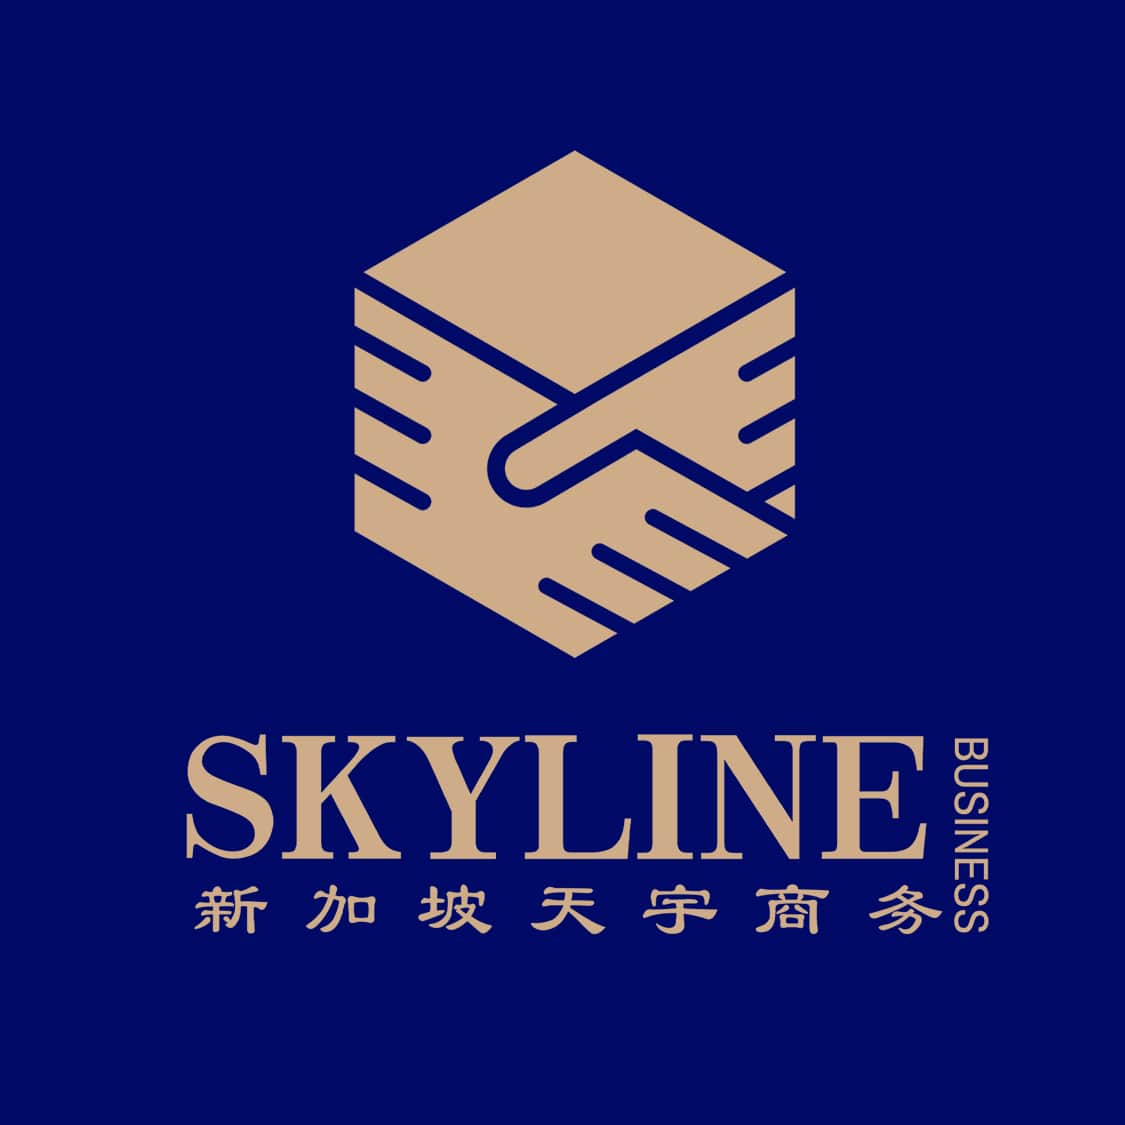 Skyline Business Consulting Pte. Ltd. company logo